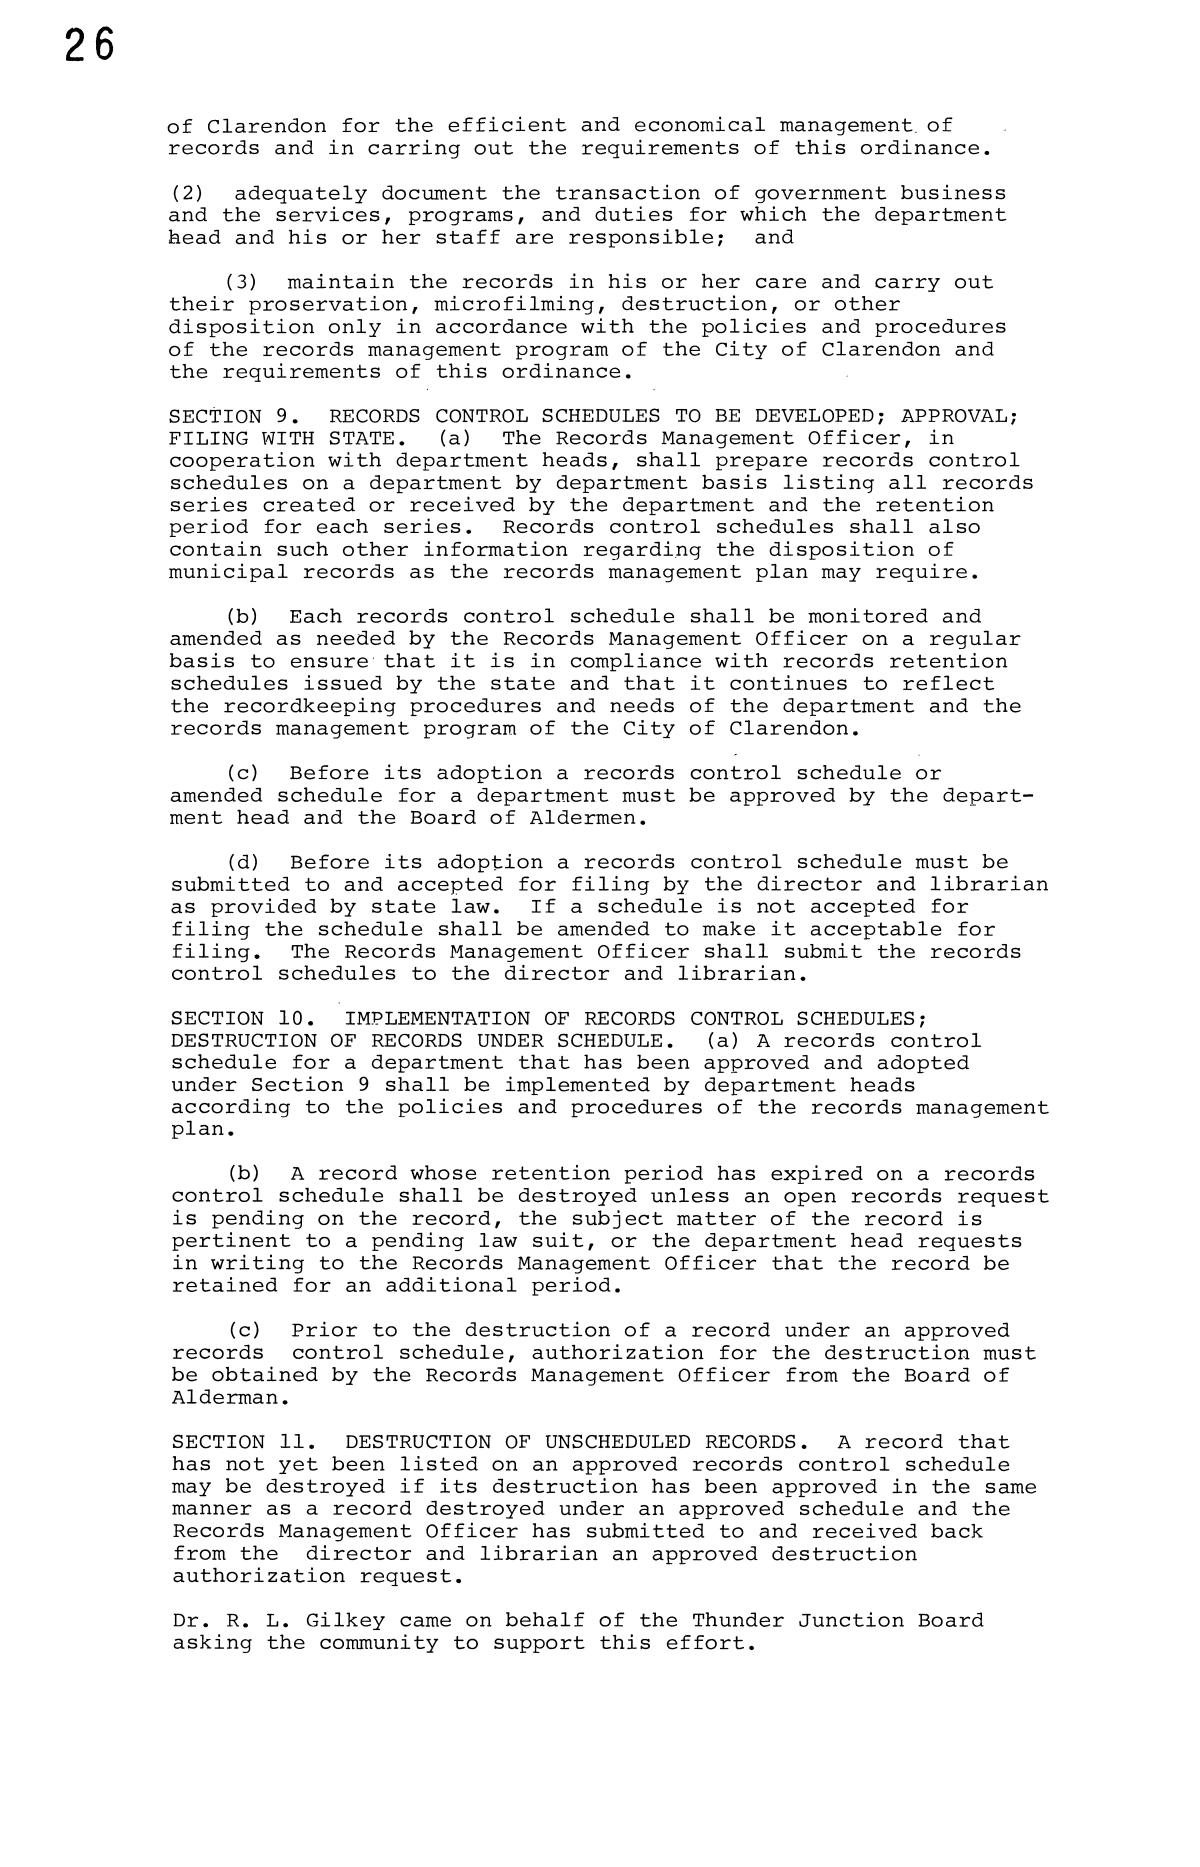 [City of Clarendon Ledger: Minutes for September 10, 1991 - September 25, 2003]
                                                
                                                    26
                                                